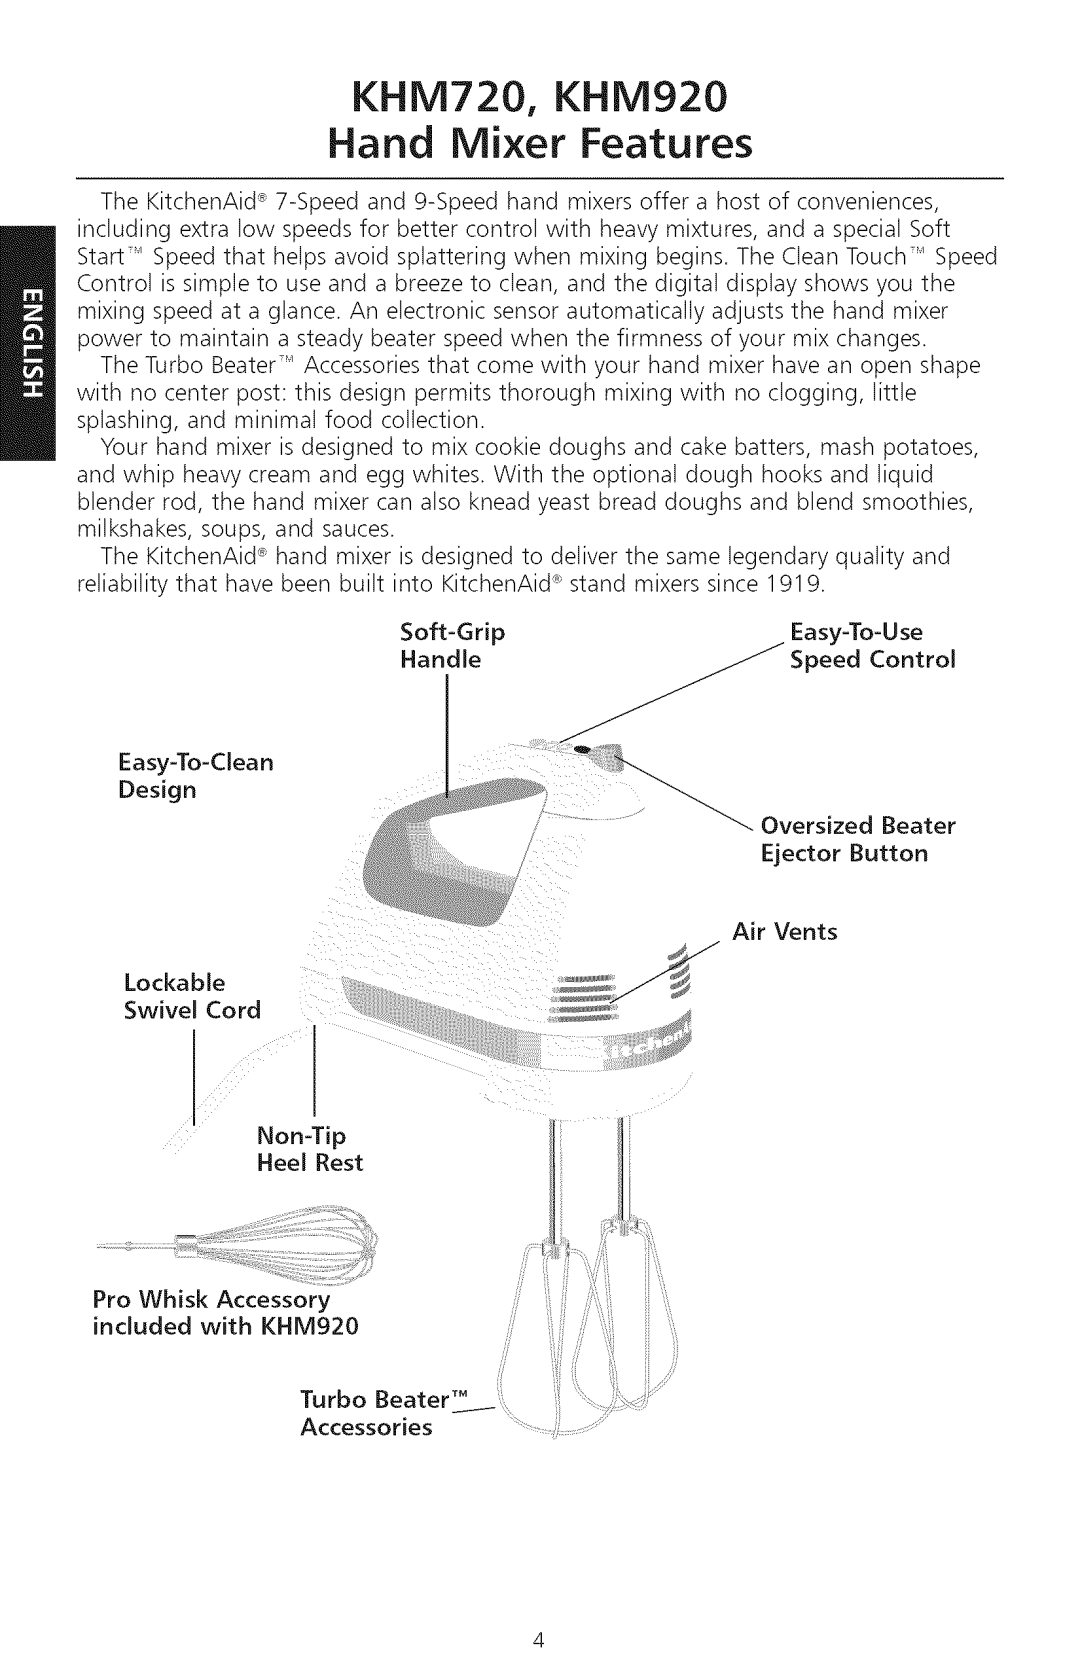 KitchenAid manual KHM720, KHM920 Hand Mixer Features 